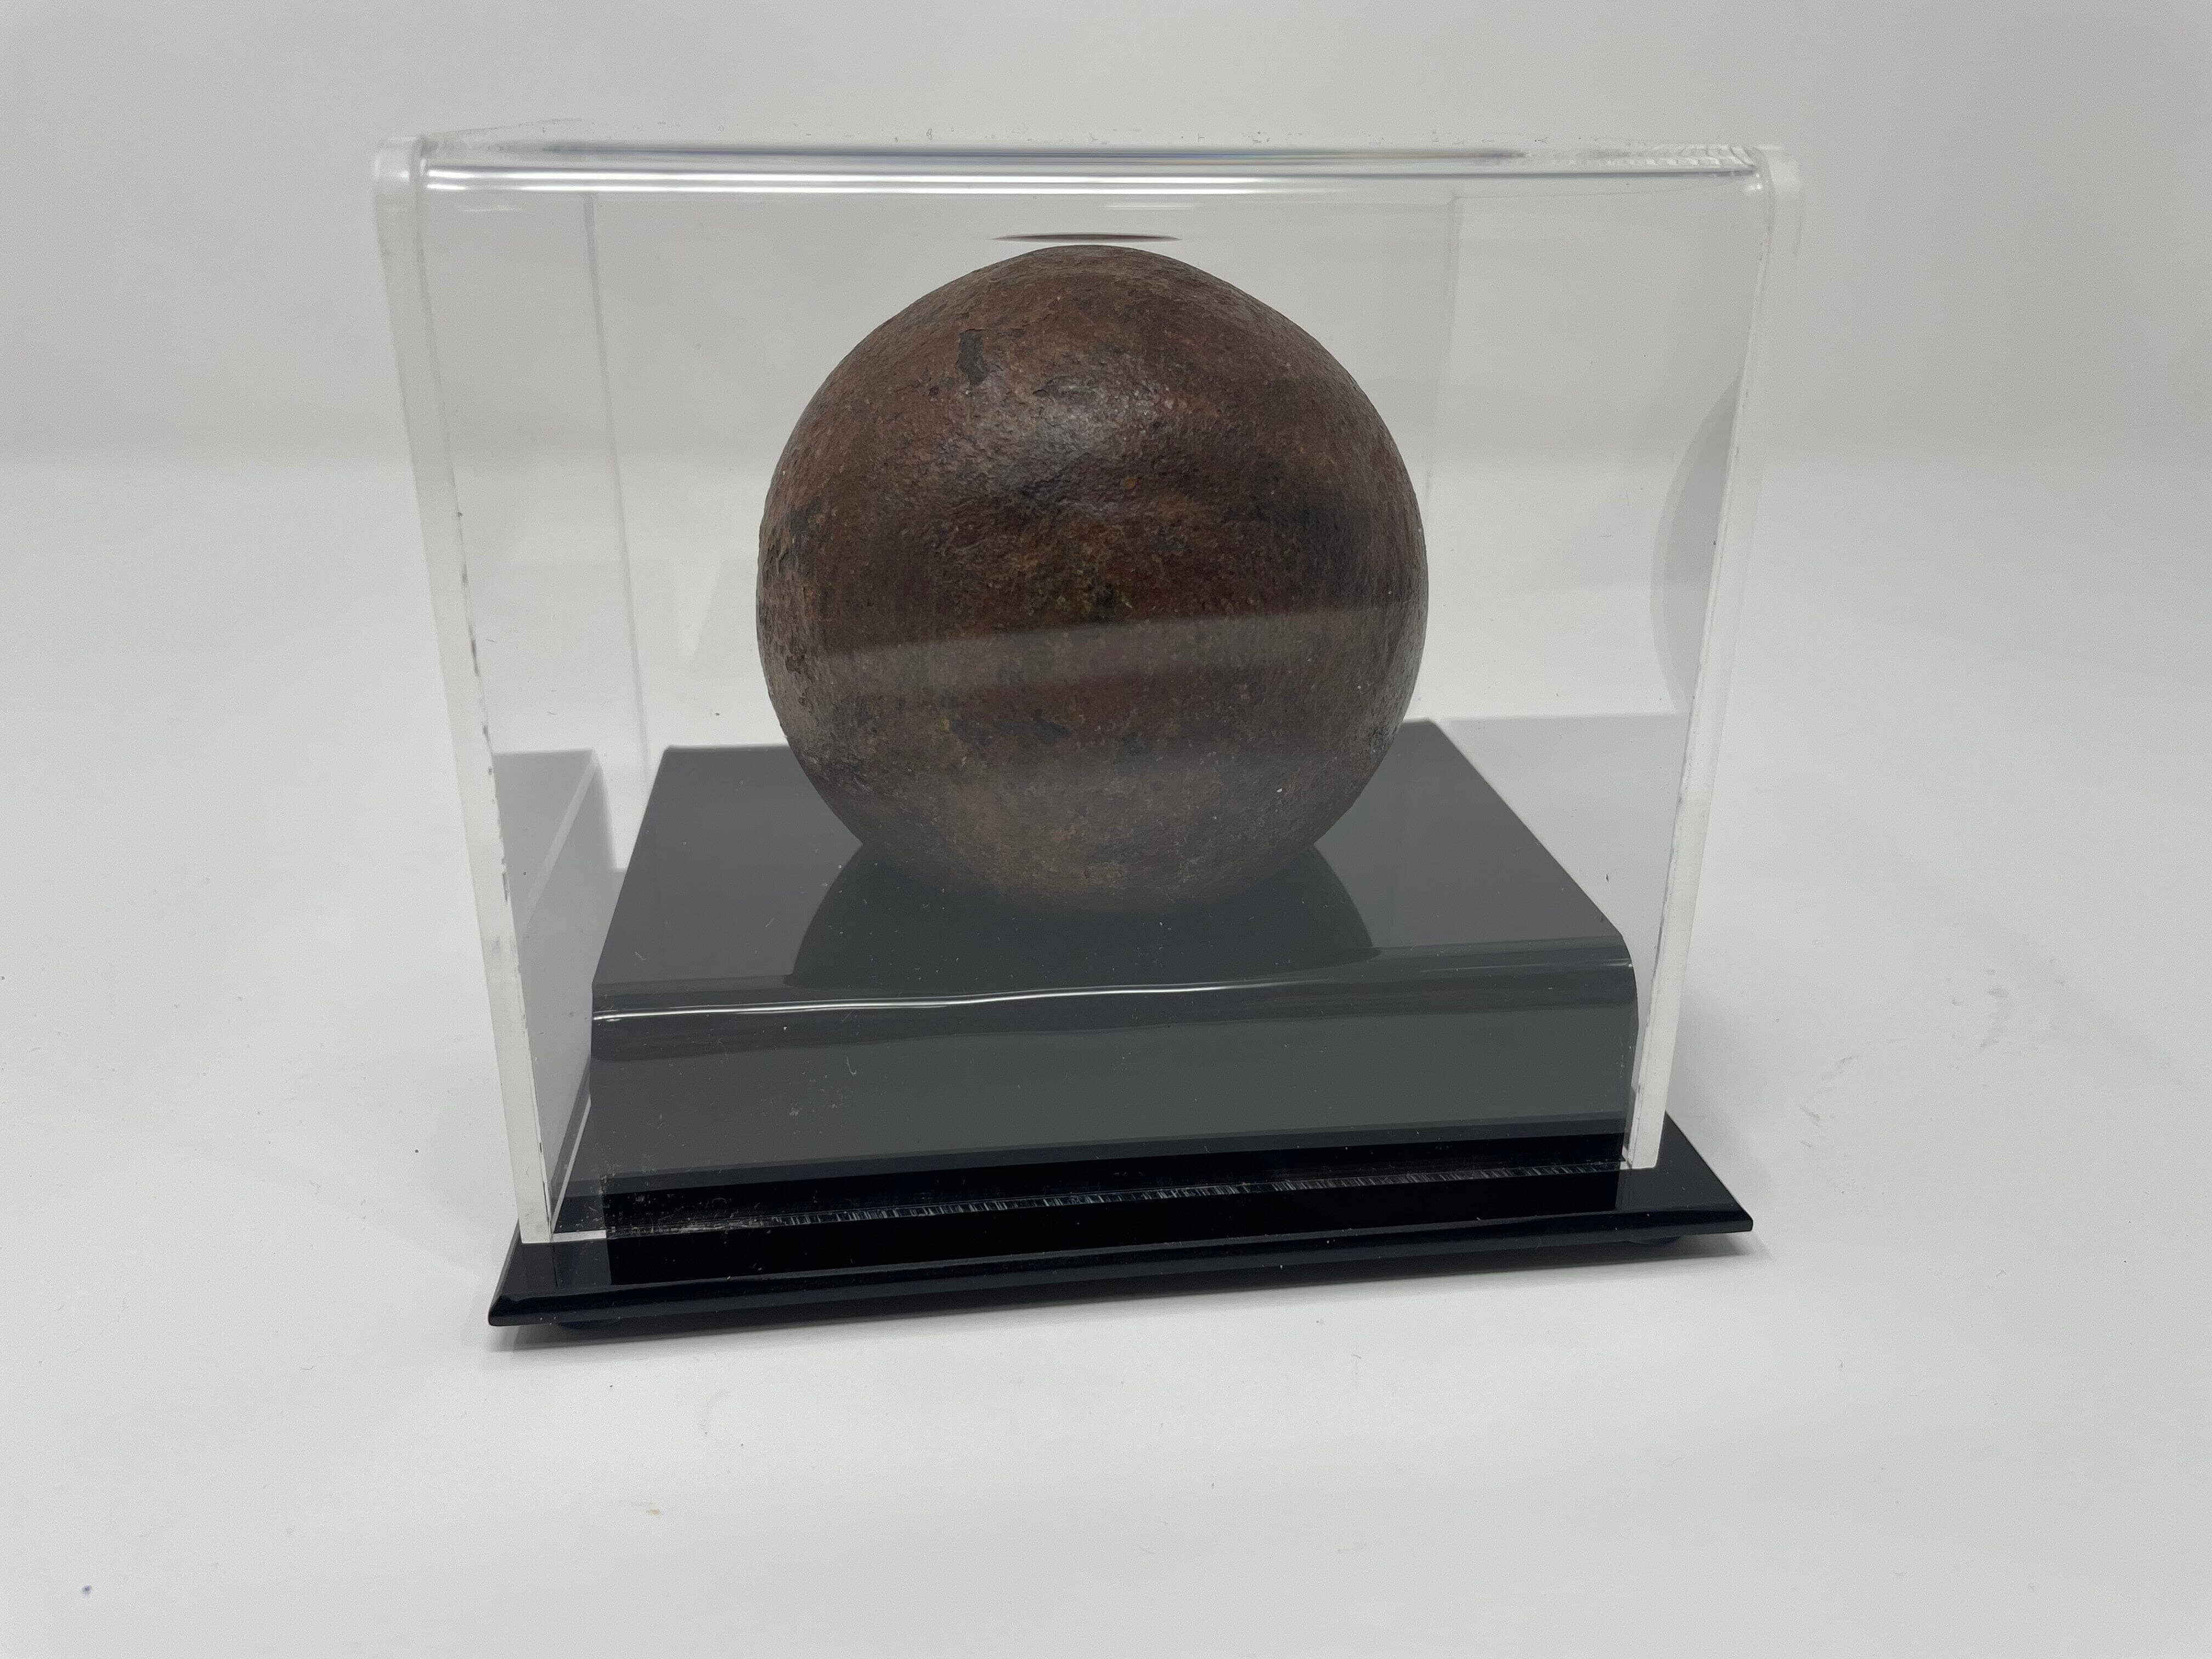 Acrylic Cannon Ball Display Case